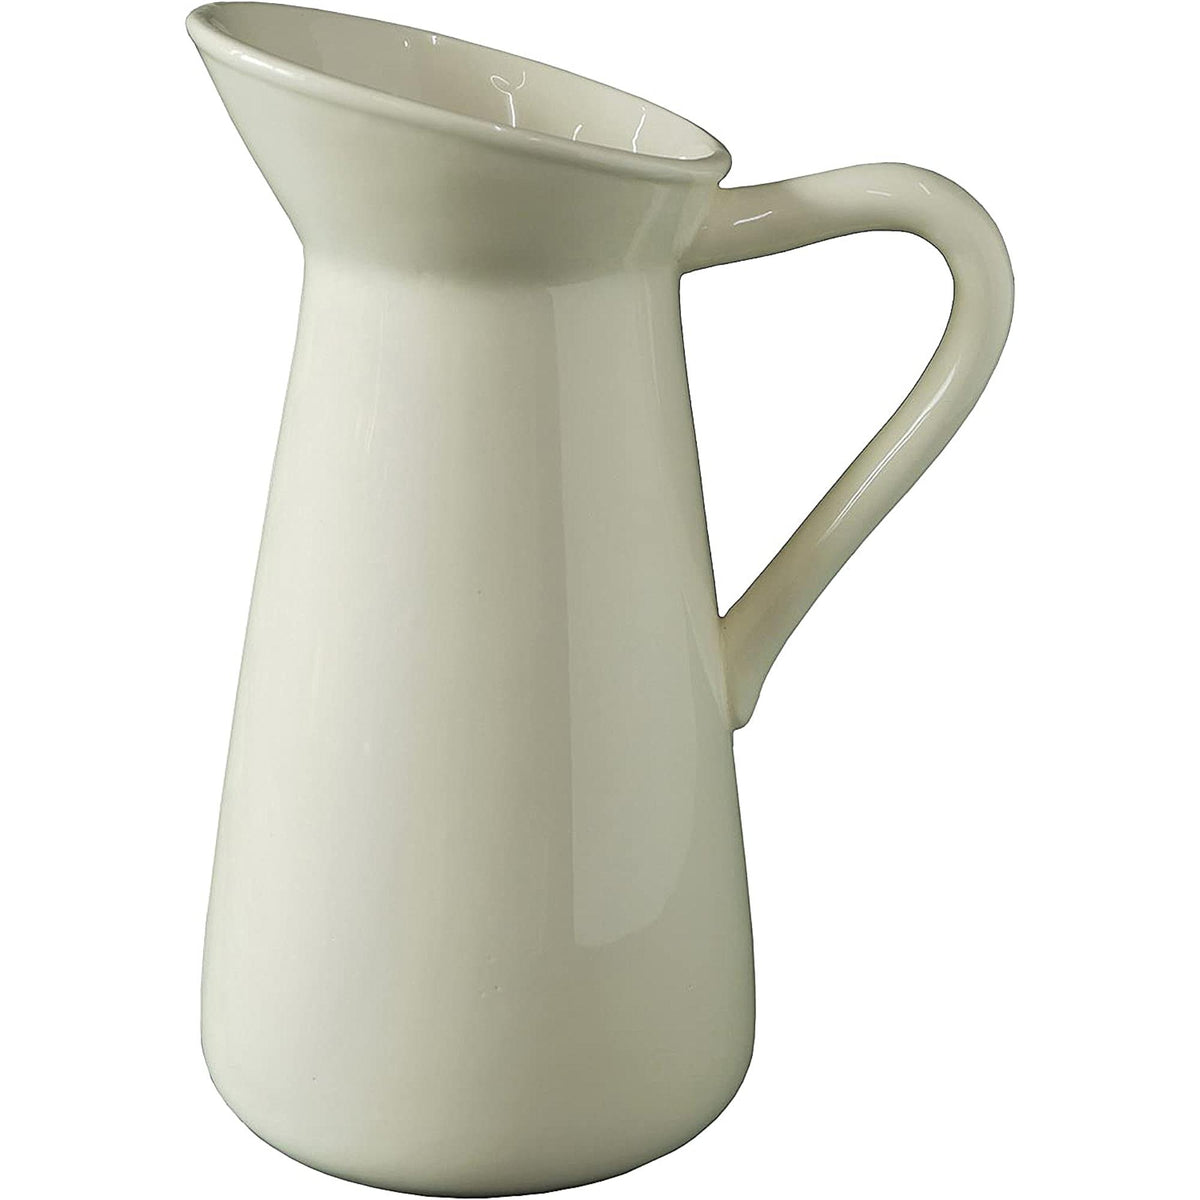 HOSLEY® Ceramic Pitcher Vase,   Cream Color, 10 inches Tall